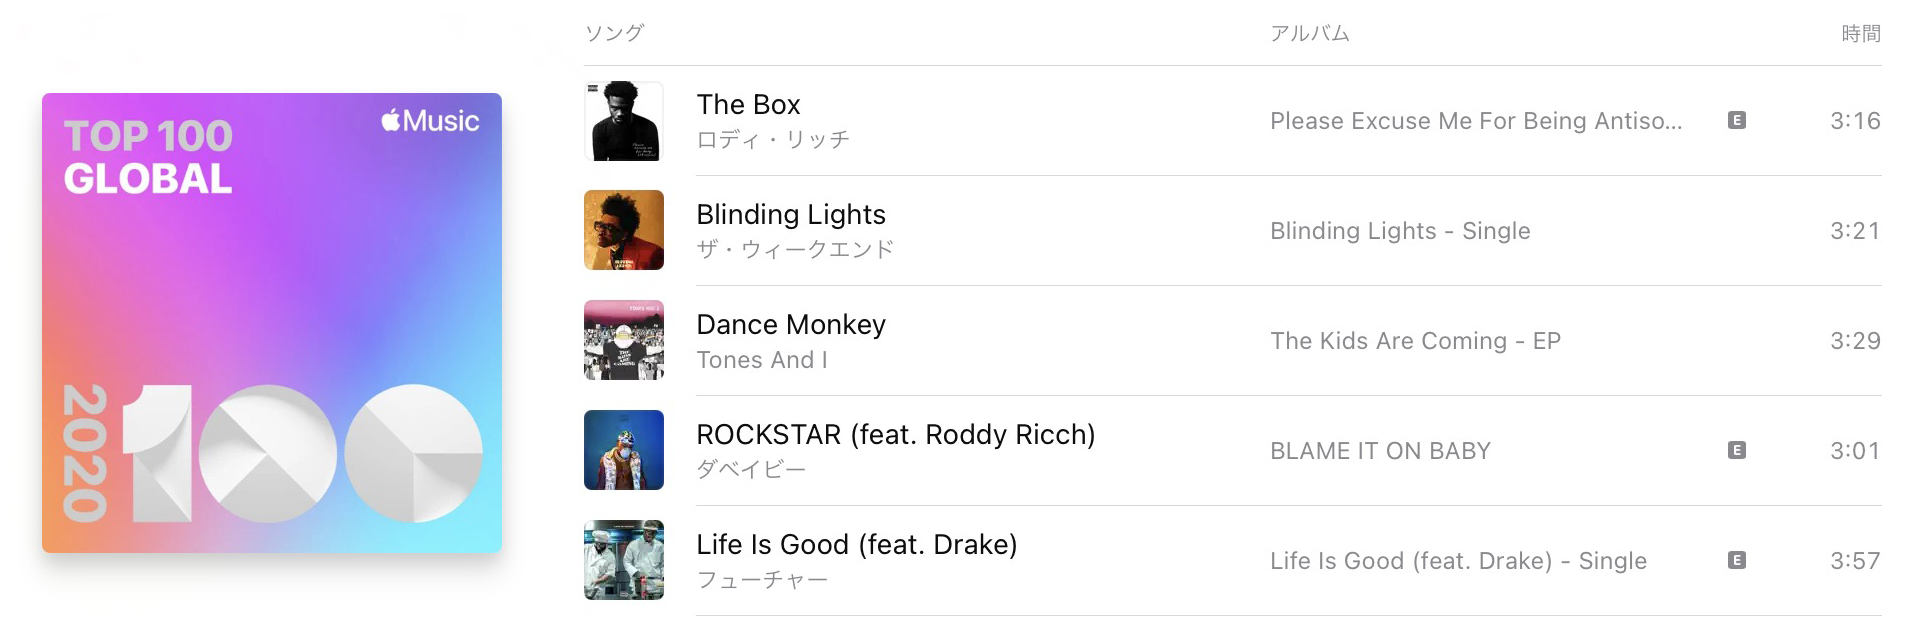 苹果公布 Apple Music 年度榜单